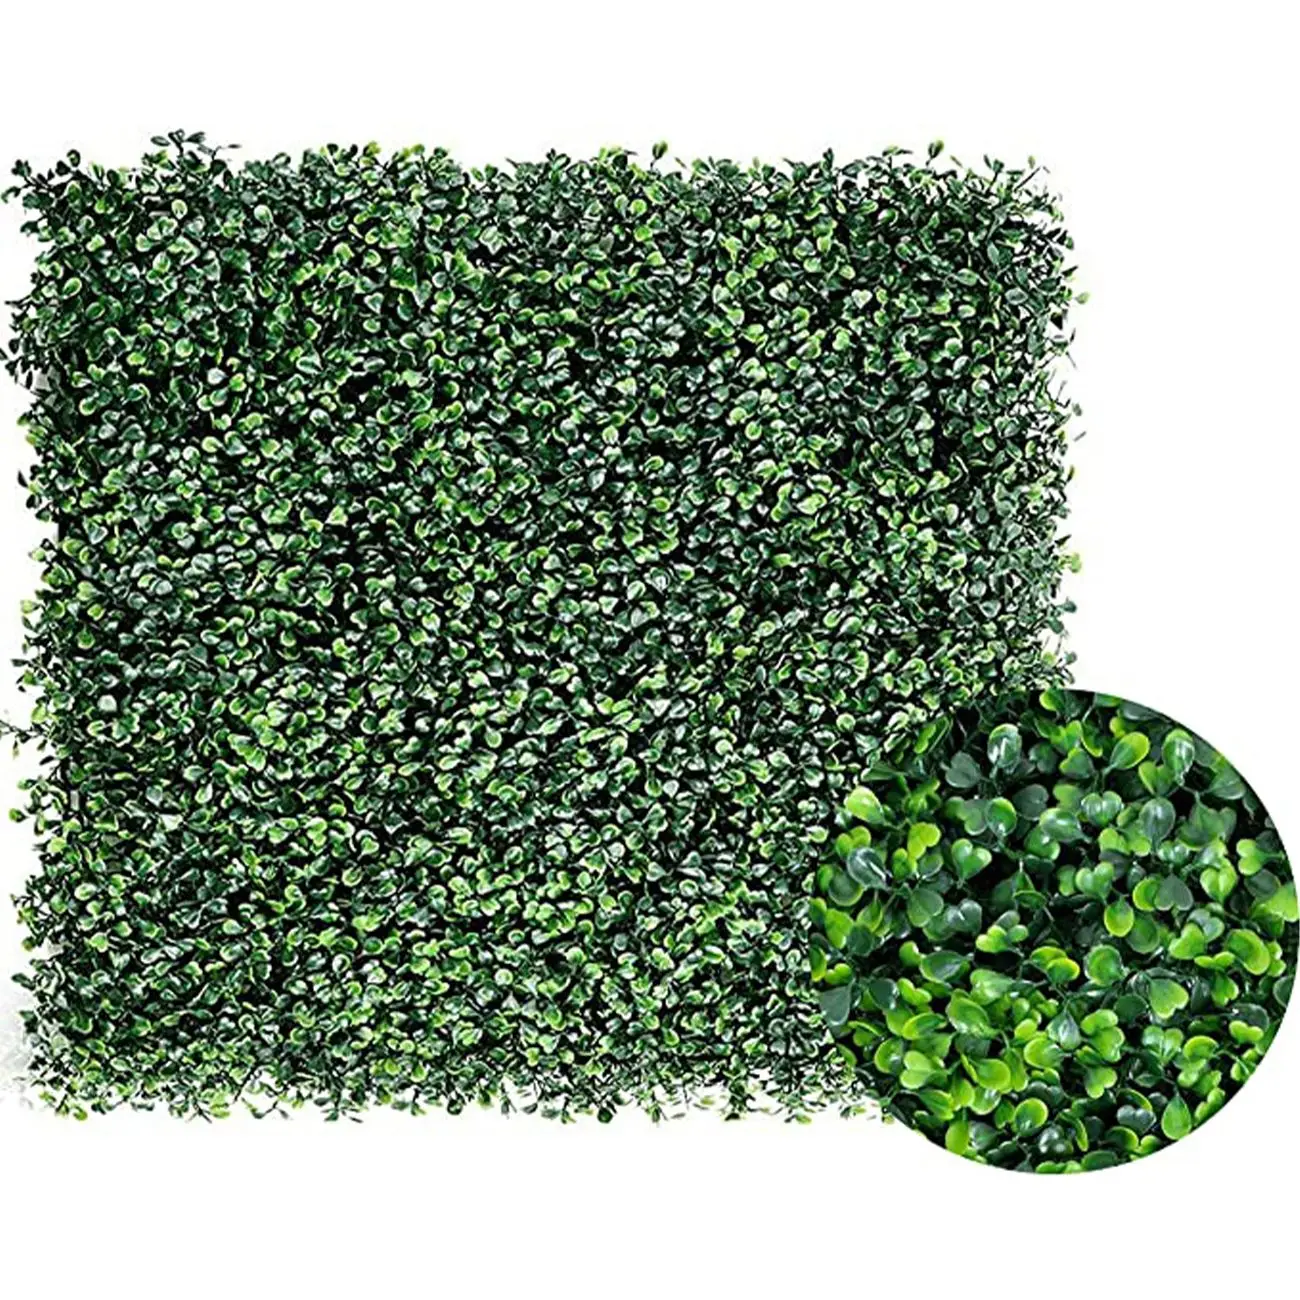 

1 Piece Of Artificial Simulation Plant Simulation Lawn Decoration Grass Green Lawn Micro-Landscape Beautification Ornaments